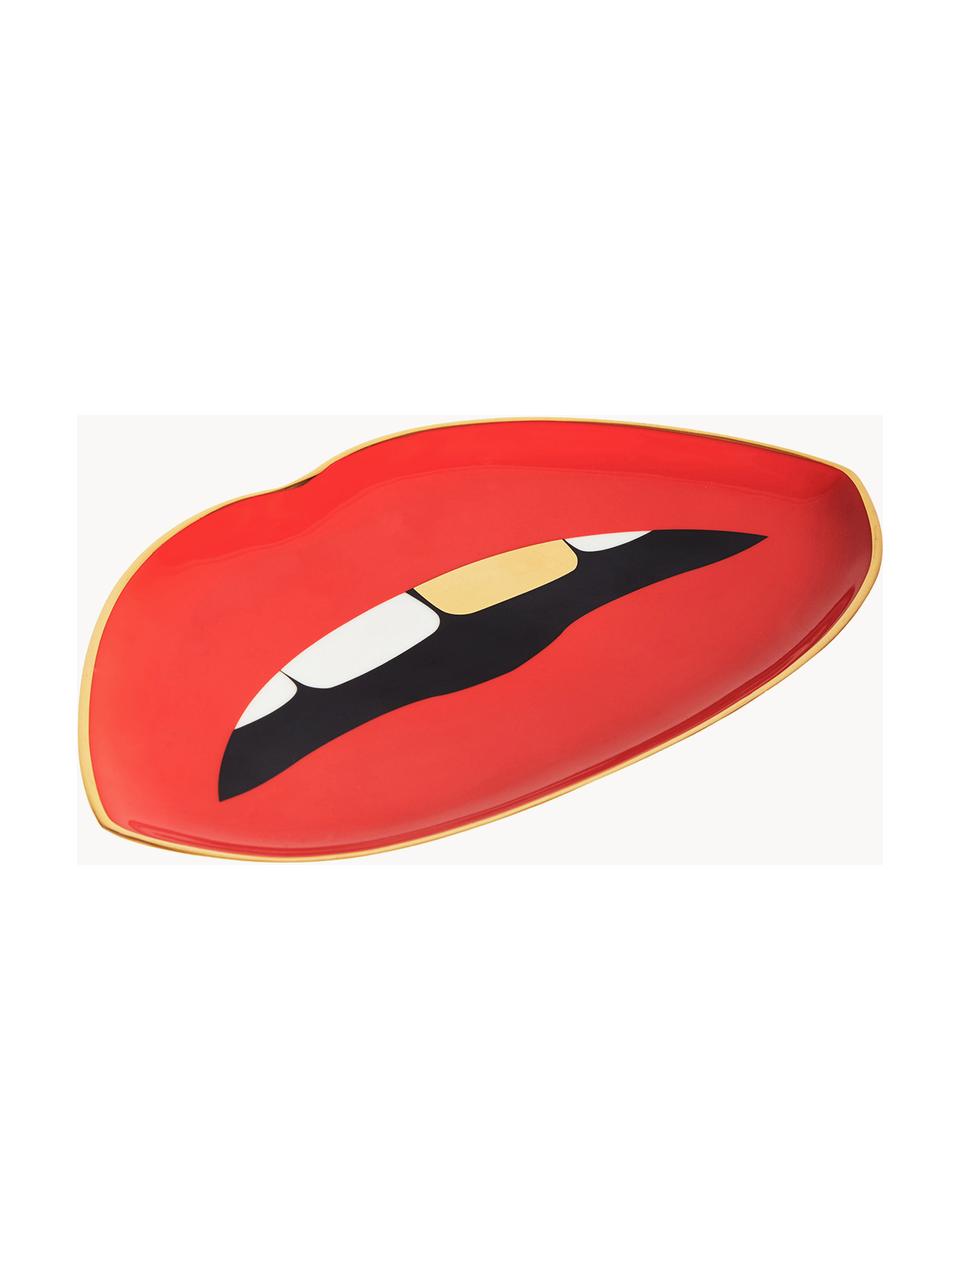 Porzellan Deko-Tablett Lips mit Gold, Porzellan mit echten Goldakzenten, Rot, Gold, B 24 x T 16 cm